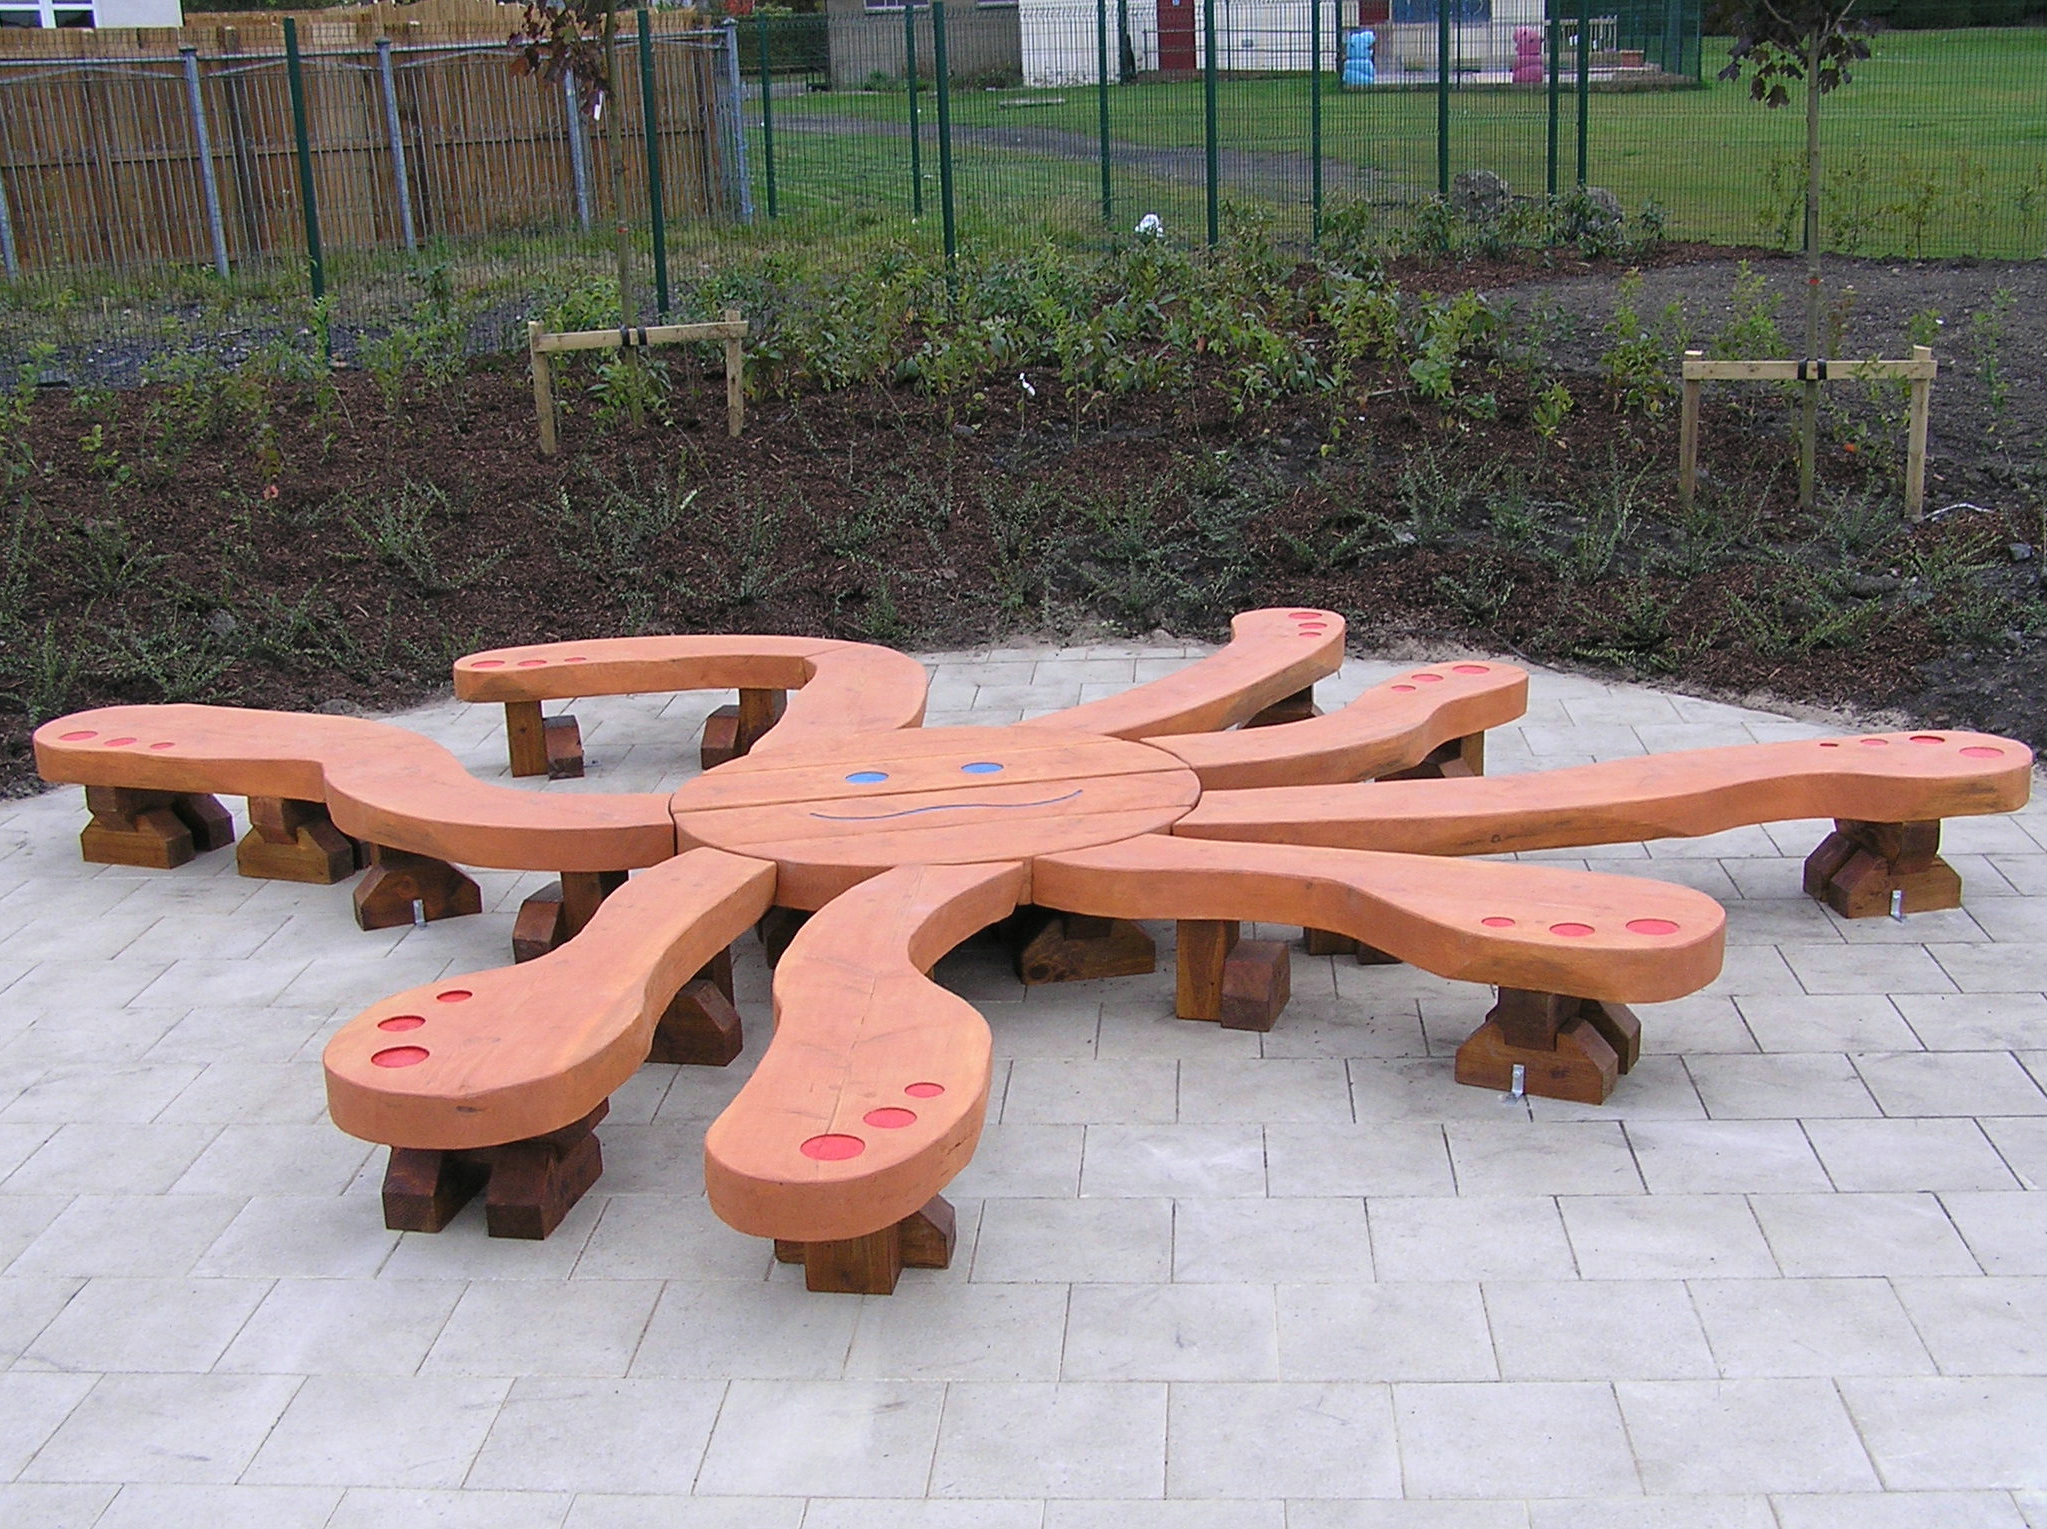 octopus, bench, school playground, friendship seating, octopus sculpture, friendship bench, outdoor learning, bespoke, designed by pupils,